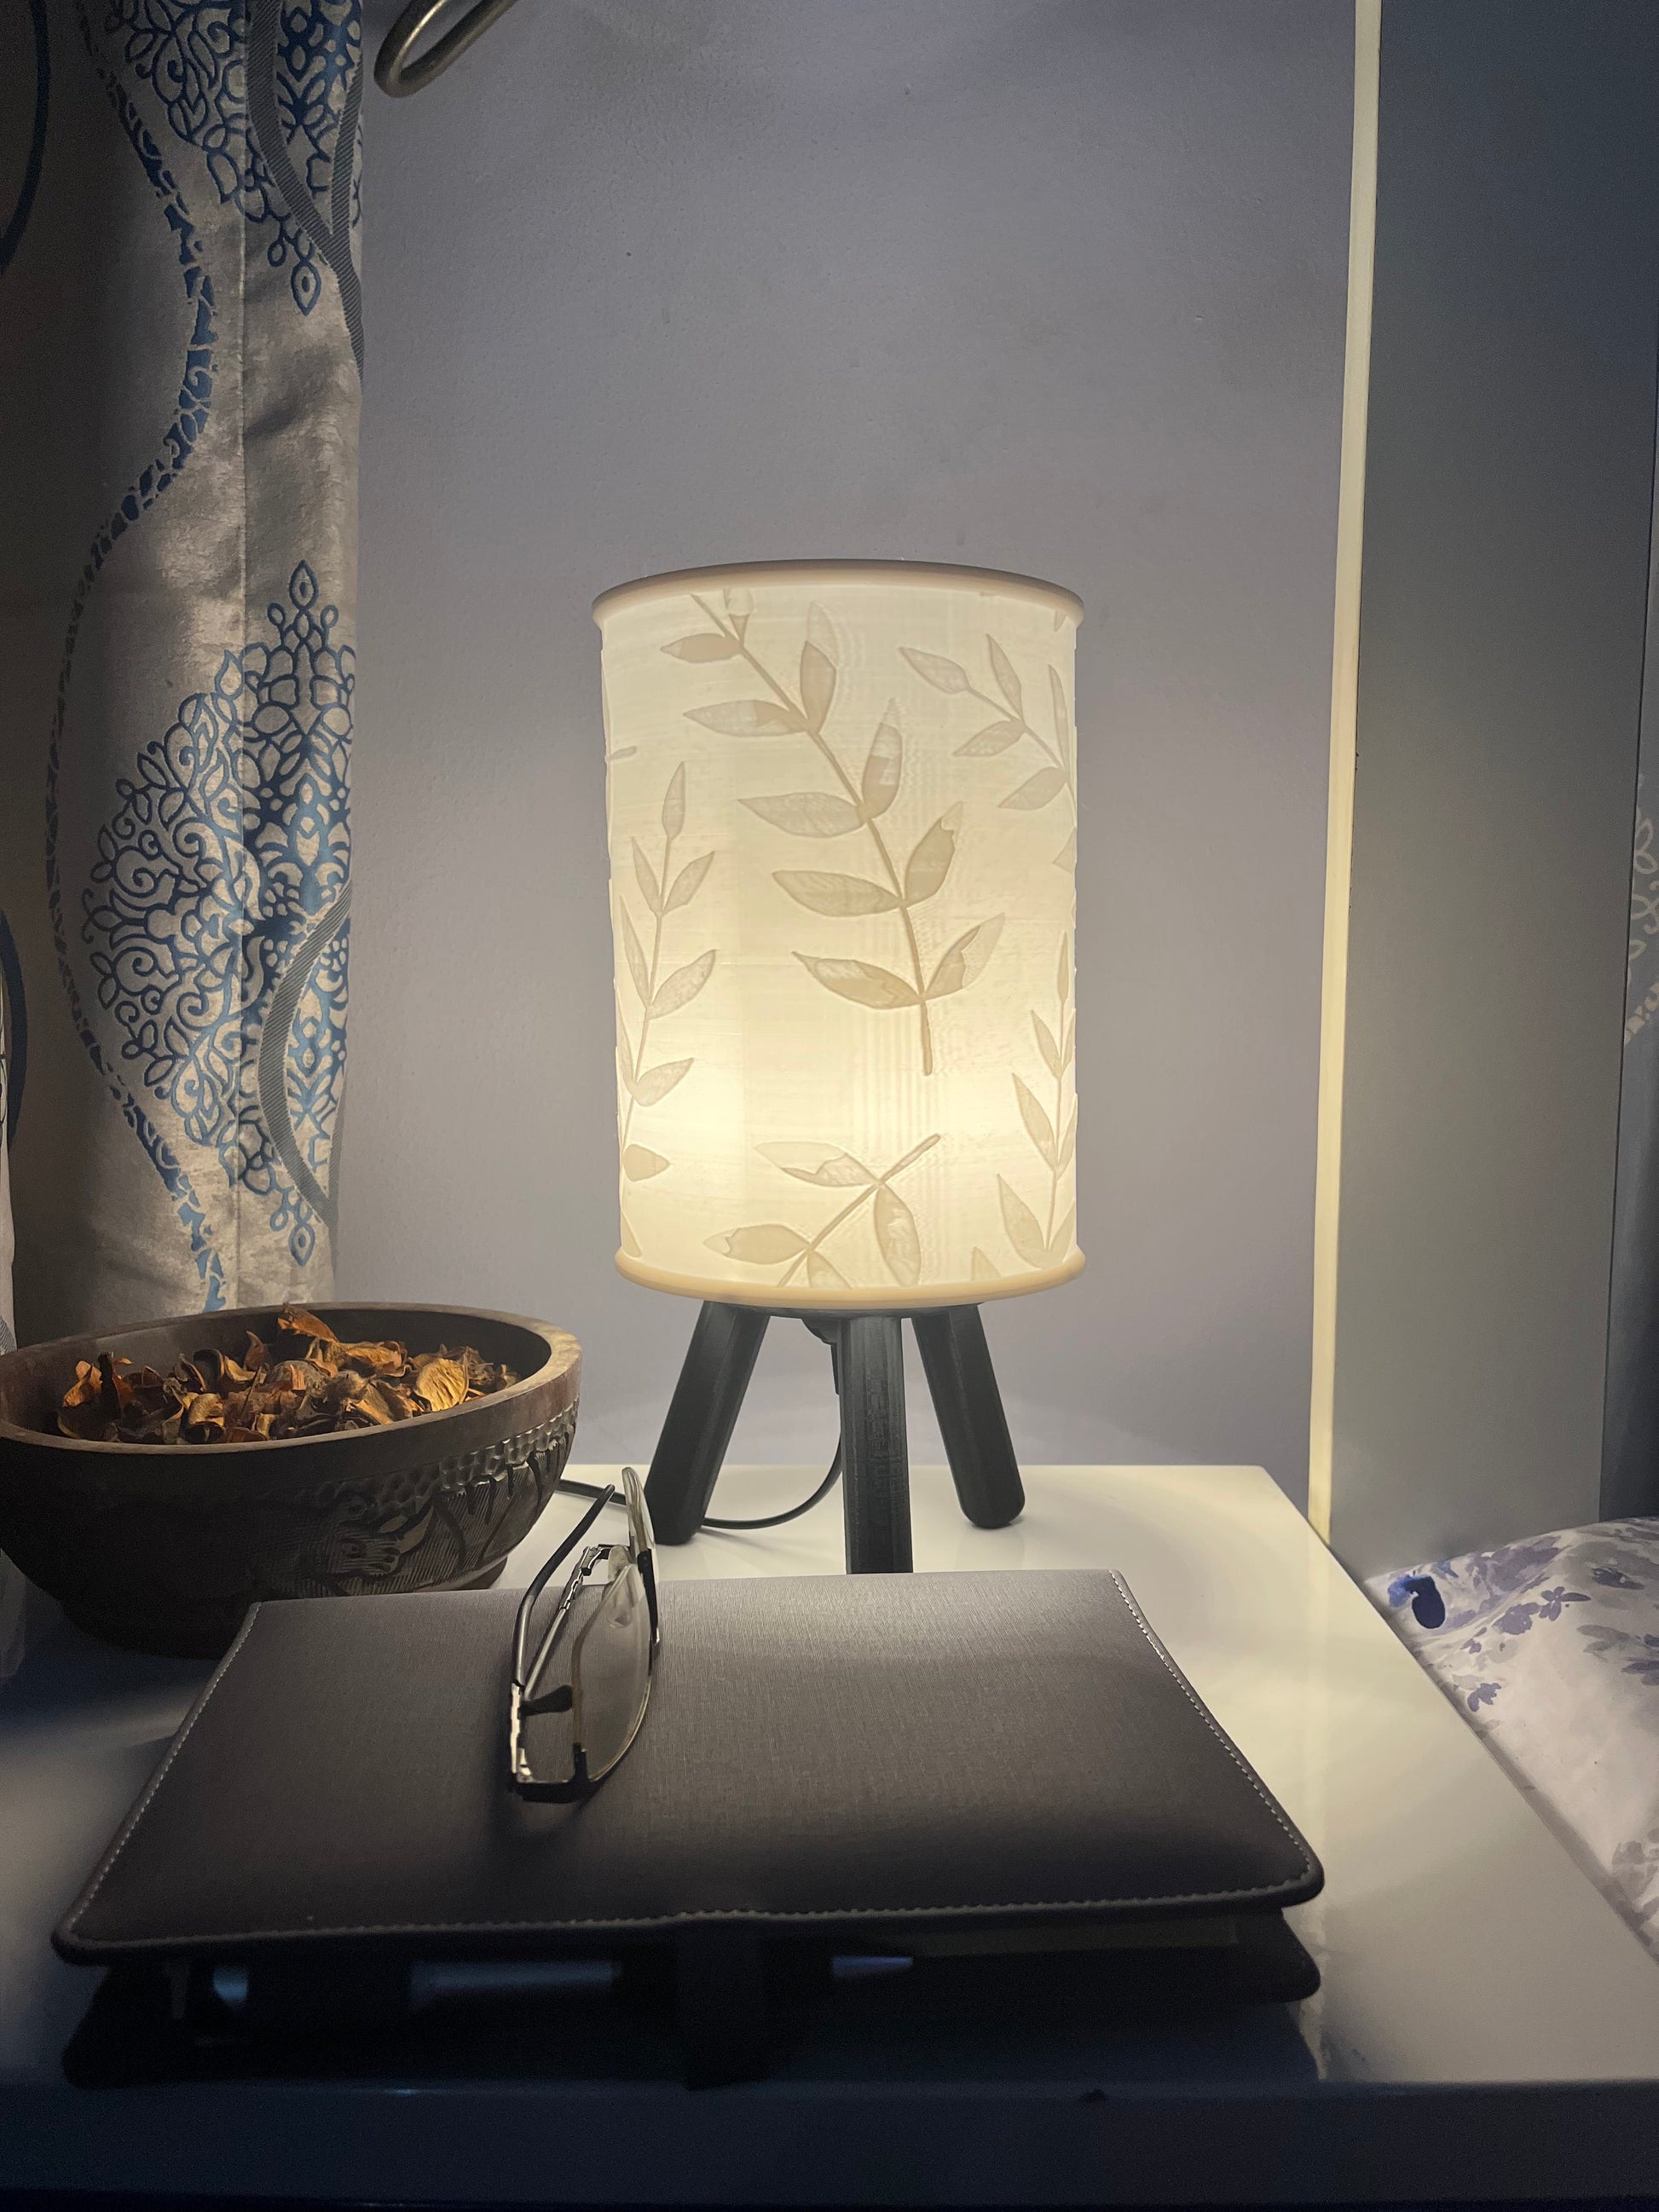 3D printed black Hako bedside/table lamp on a bedside table